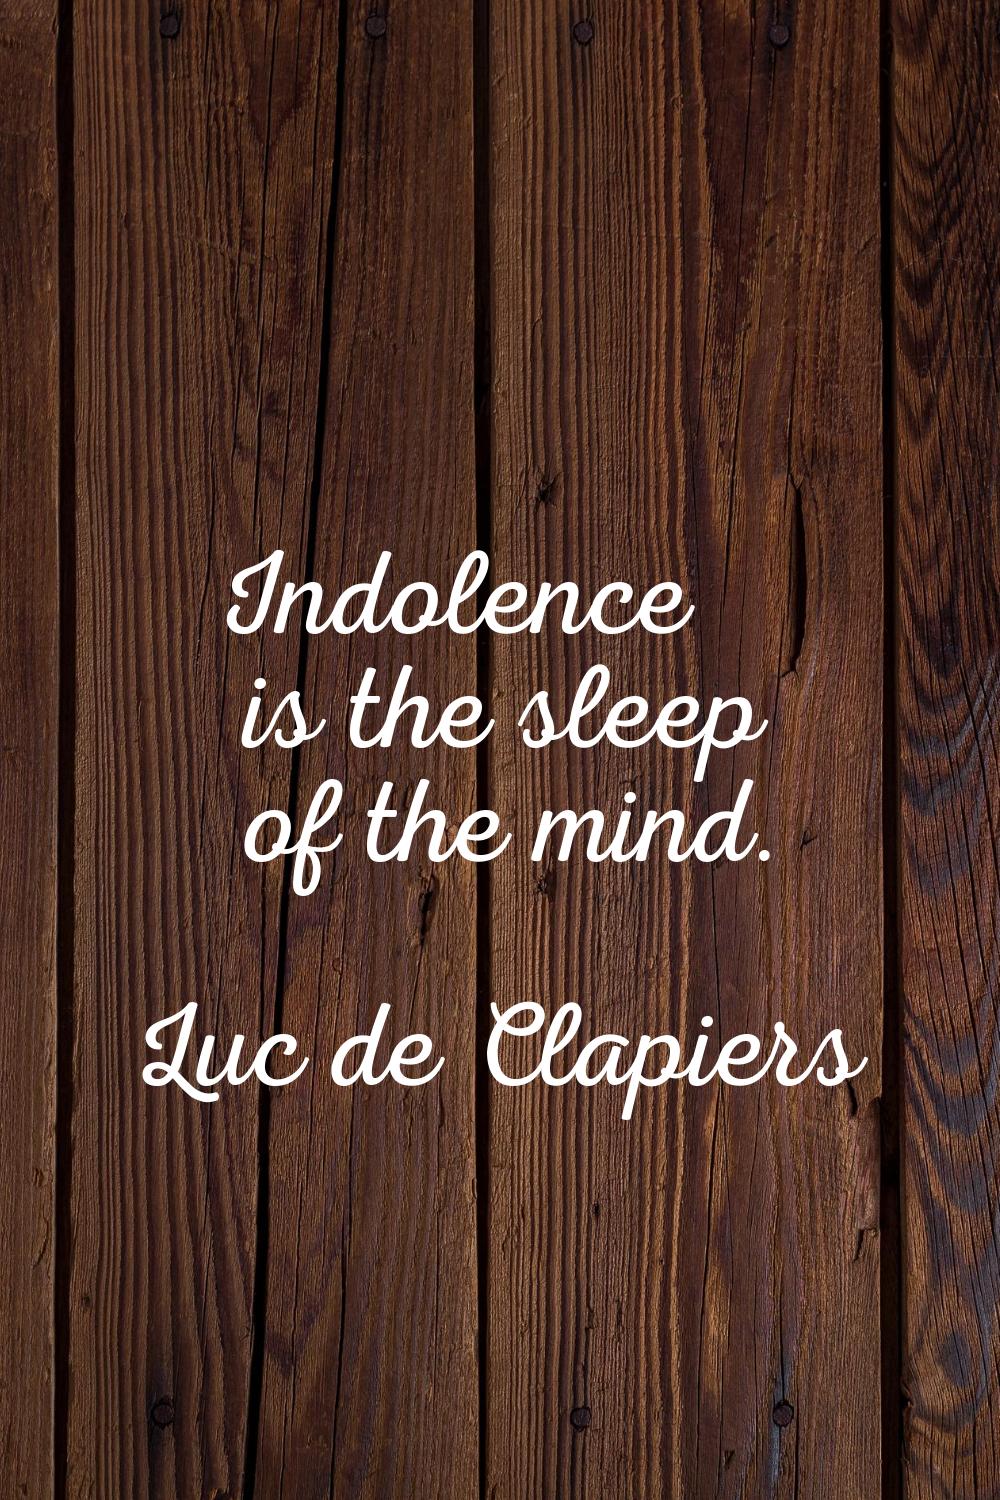 Indolence is the sleep of the mind.